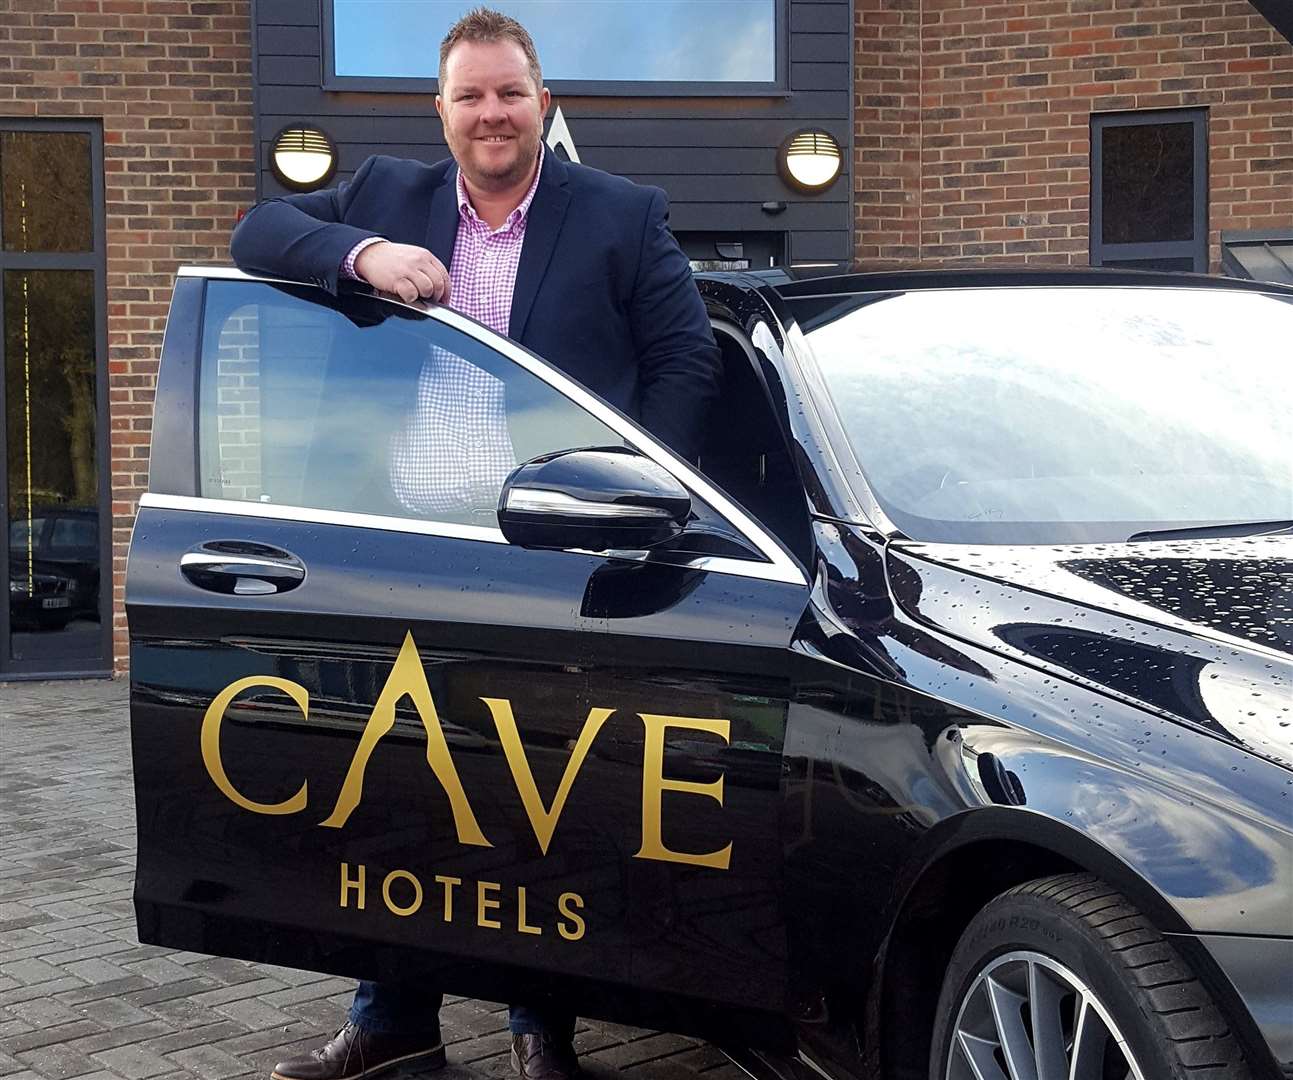 Cave Hotel chief executive Johnathan Callister